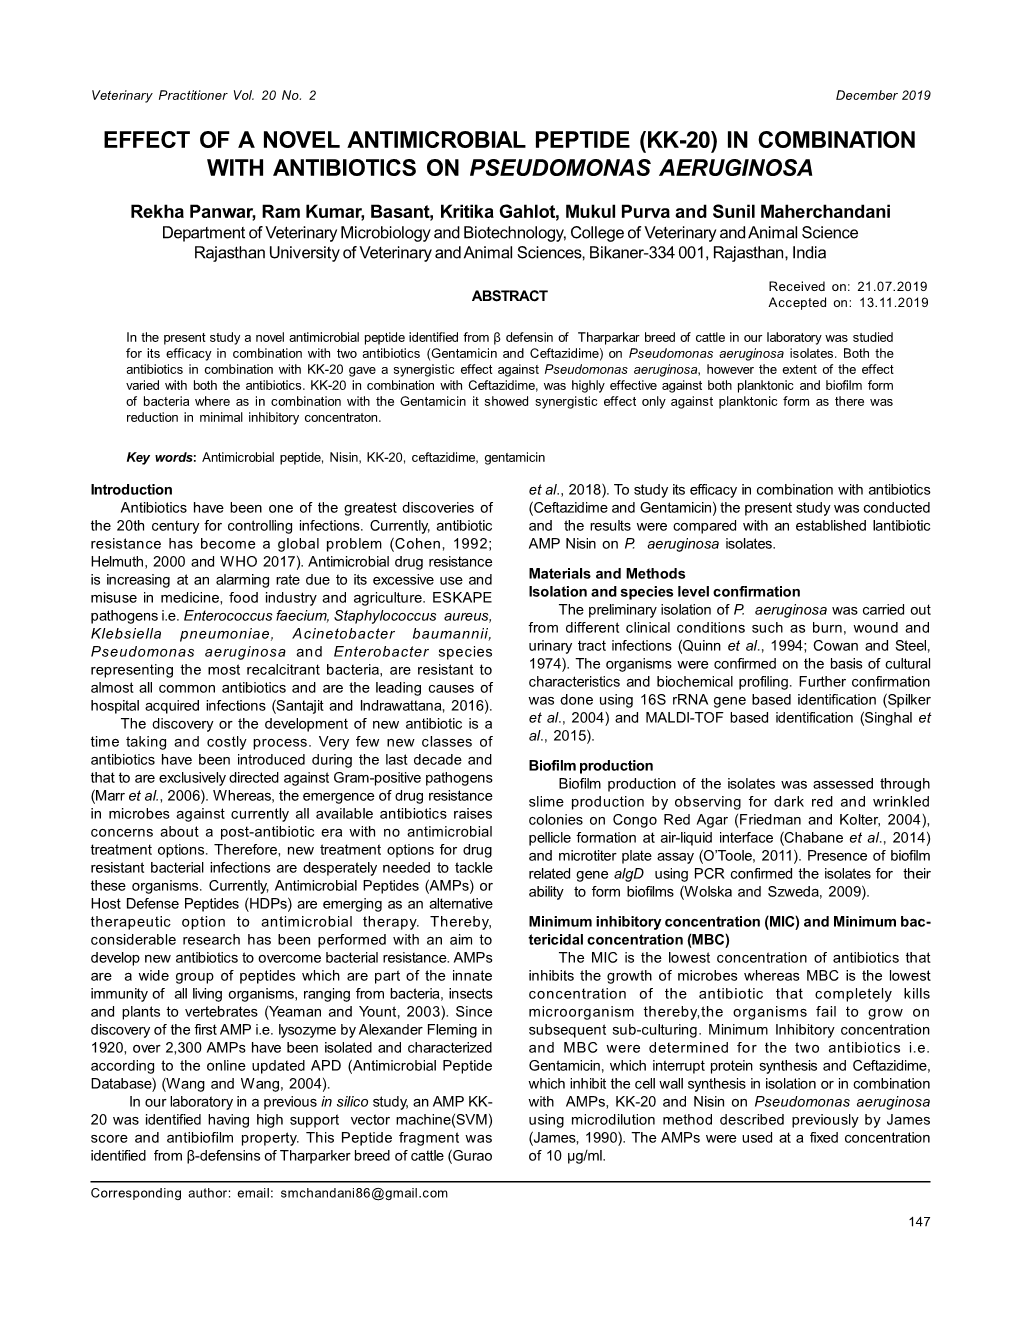 Effect of a Novel Antimicrobial Peptide (Kk-20) in Combination with Antibiotics on Pseudomonas Aeruginosa